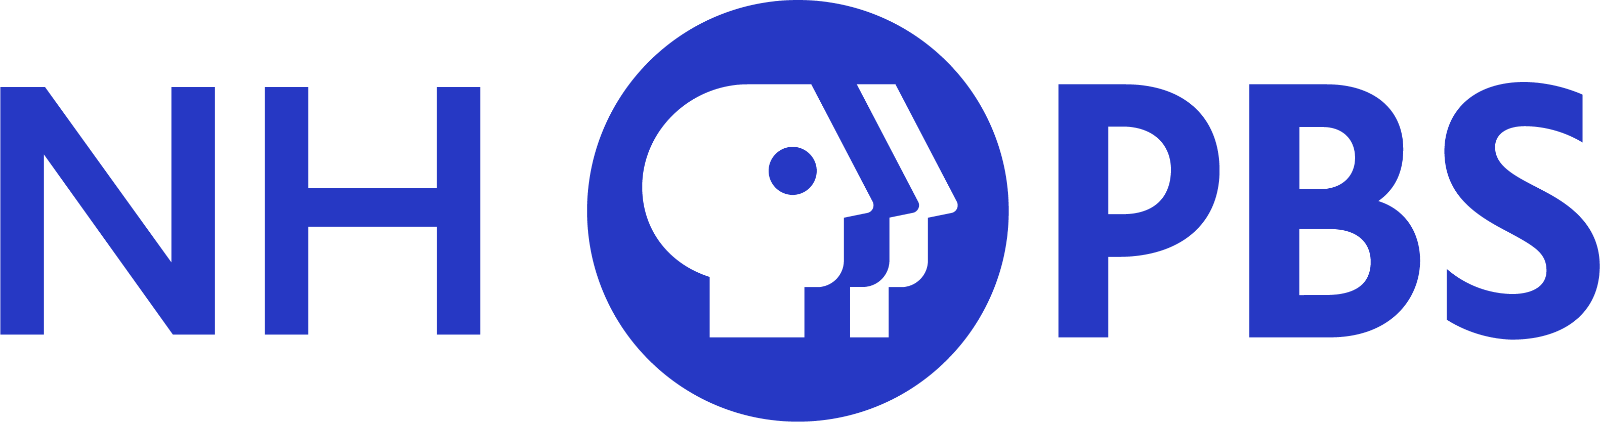 nh-pbs-logo-2020-rgb(1).png